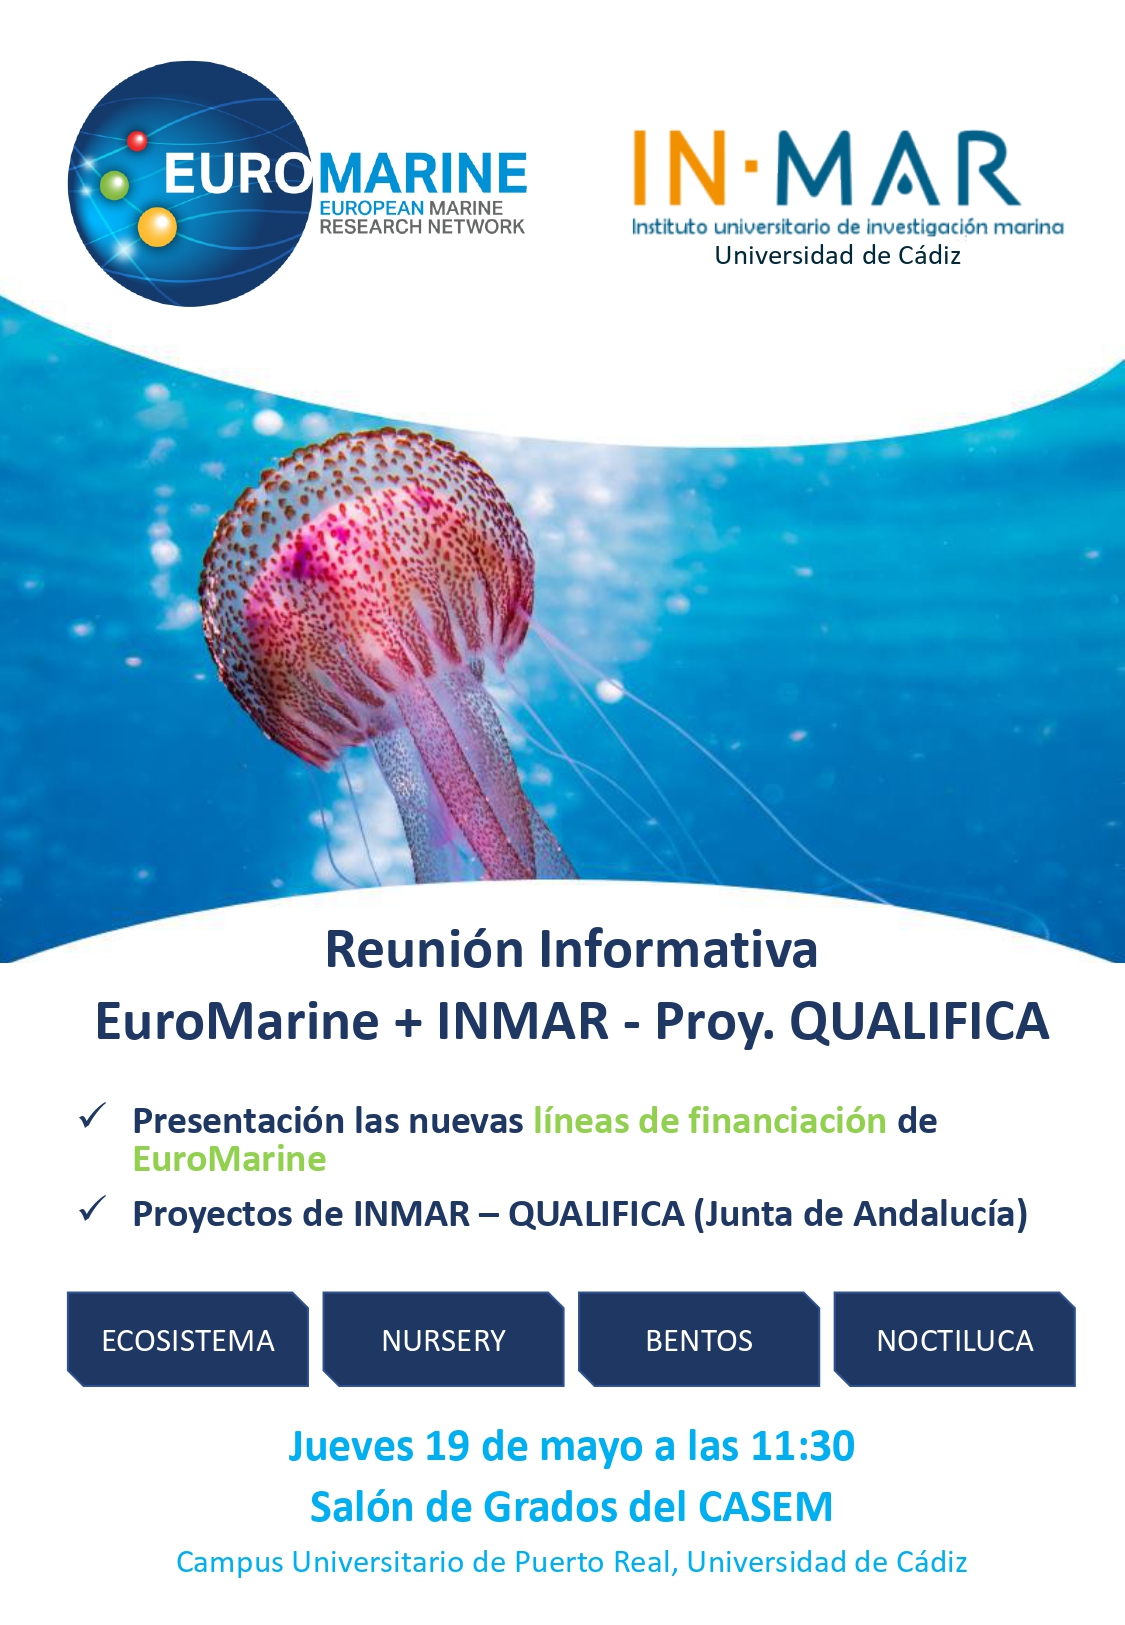 Reunión Informativa Euromarine + INMAR – Proy. QUALIFICA